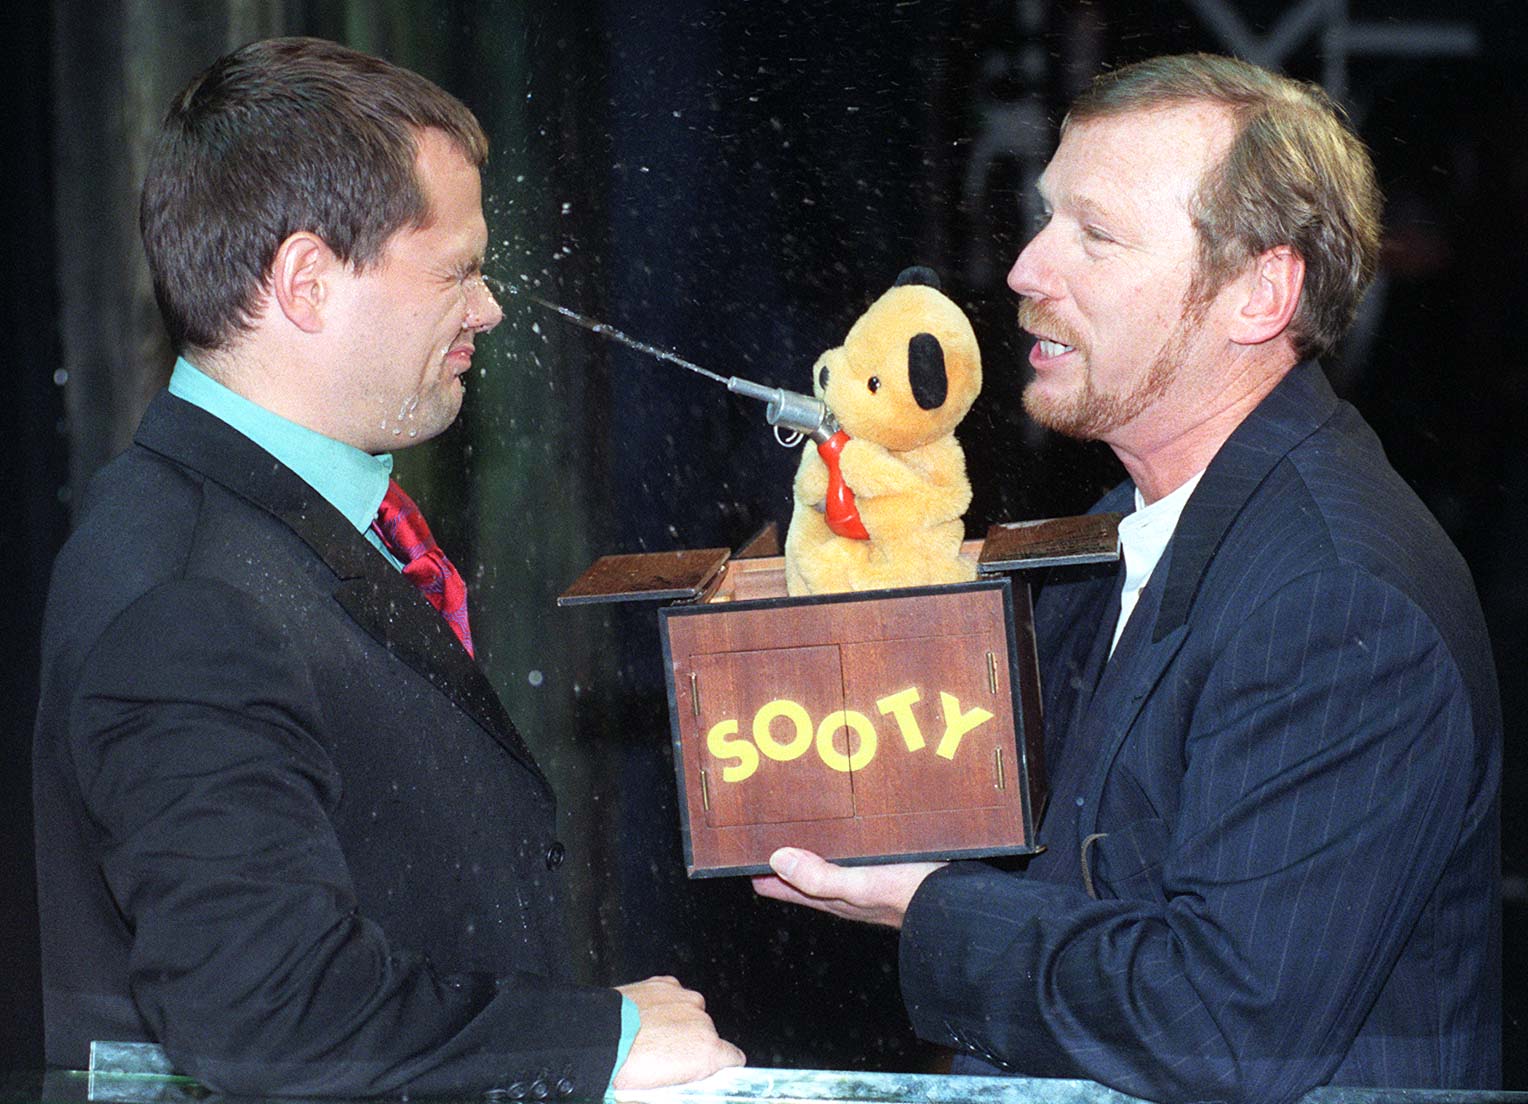 Comedian Jack Dee gets an eyeful from Sooty and puppeteer Matthew Corbett.